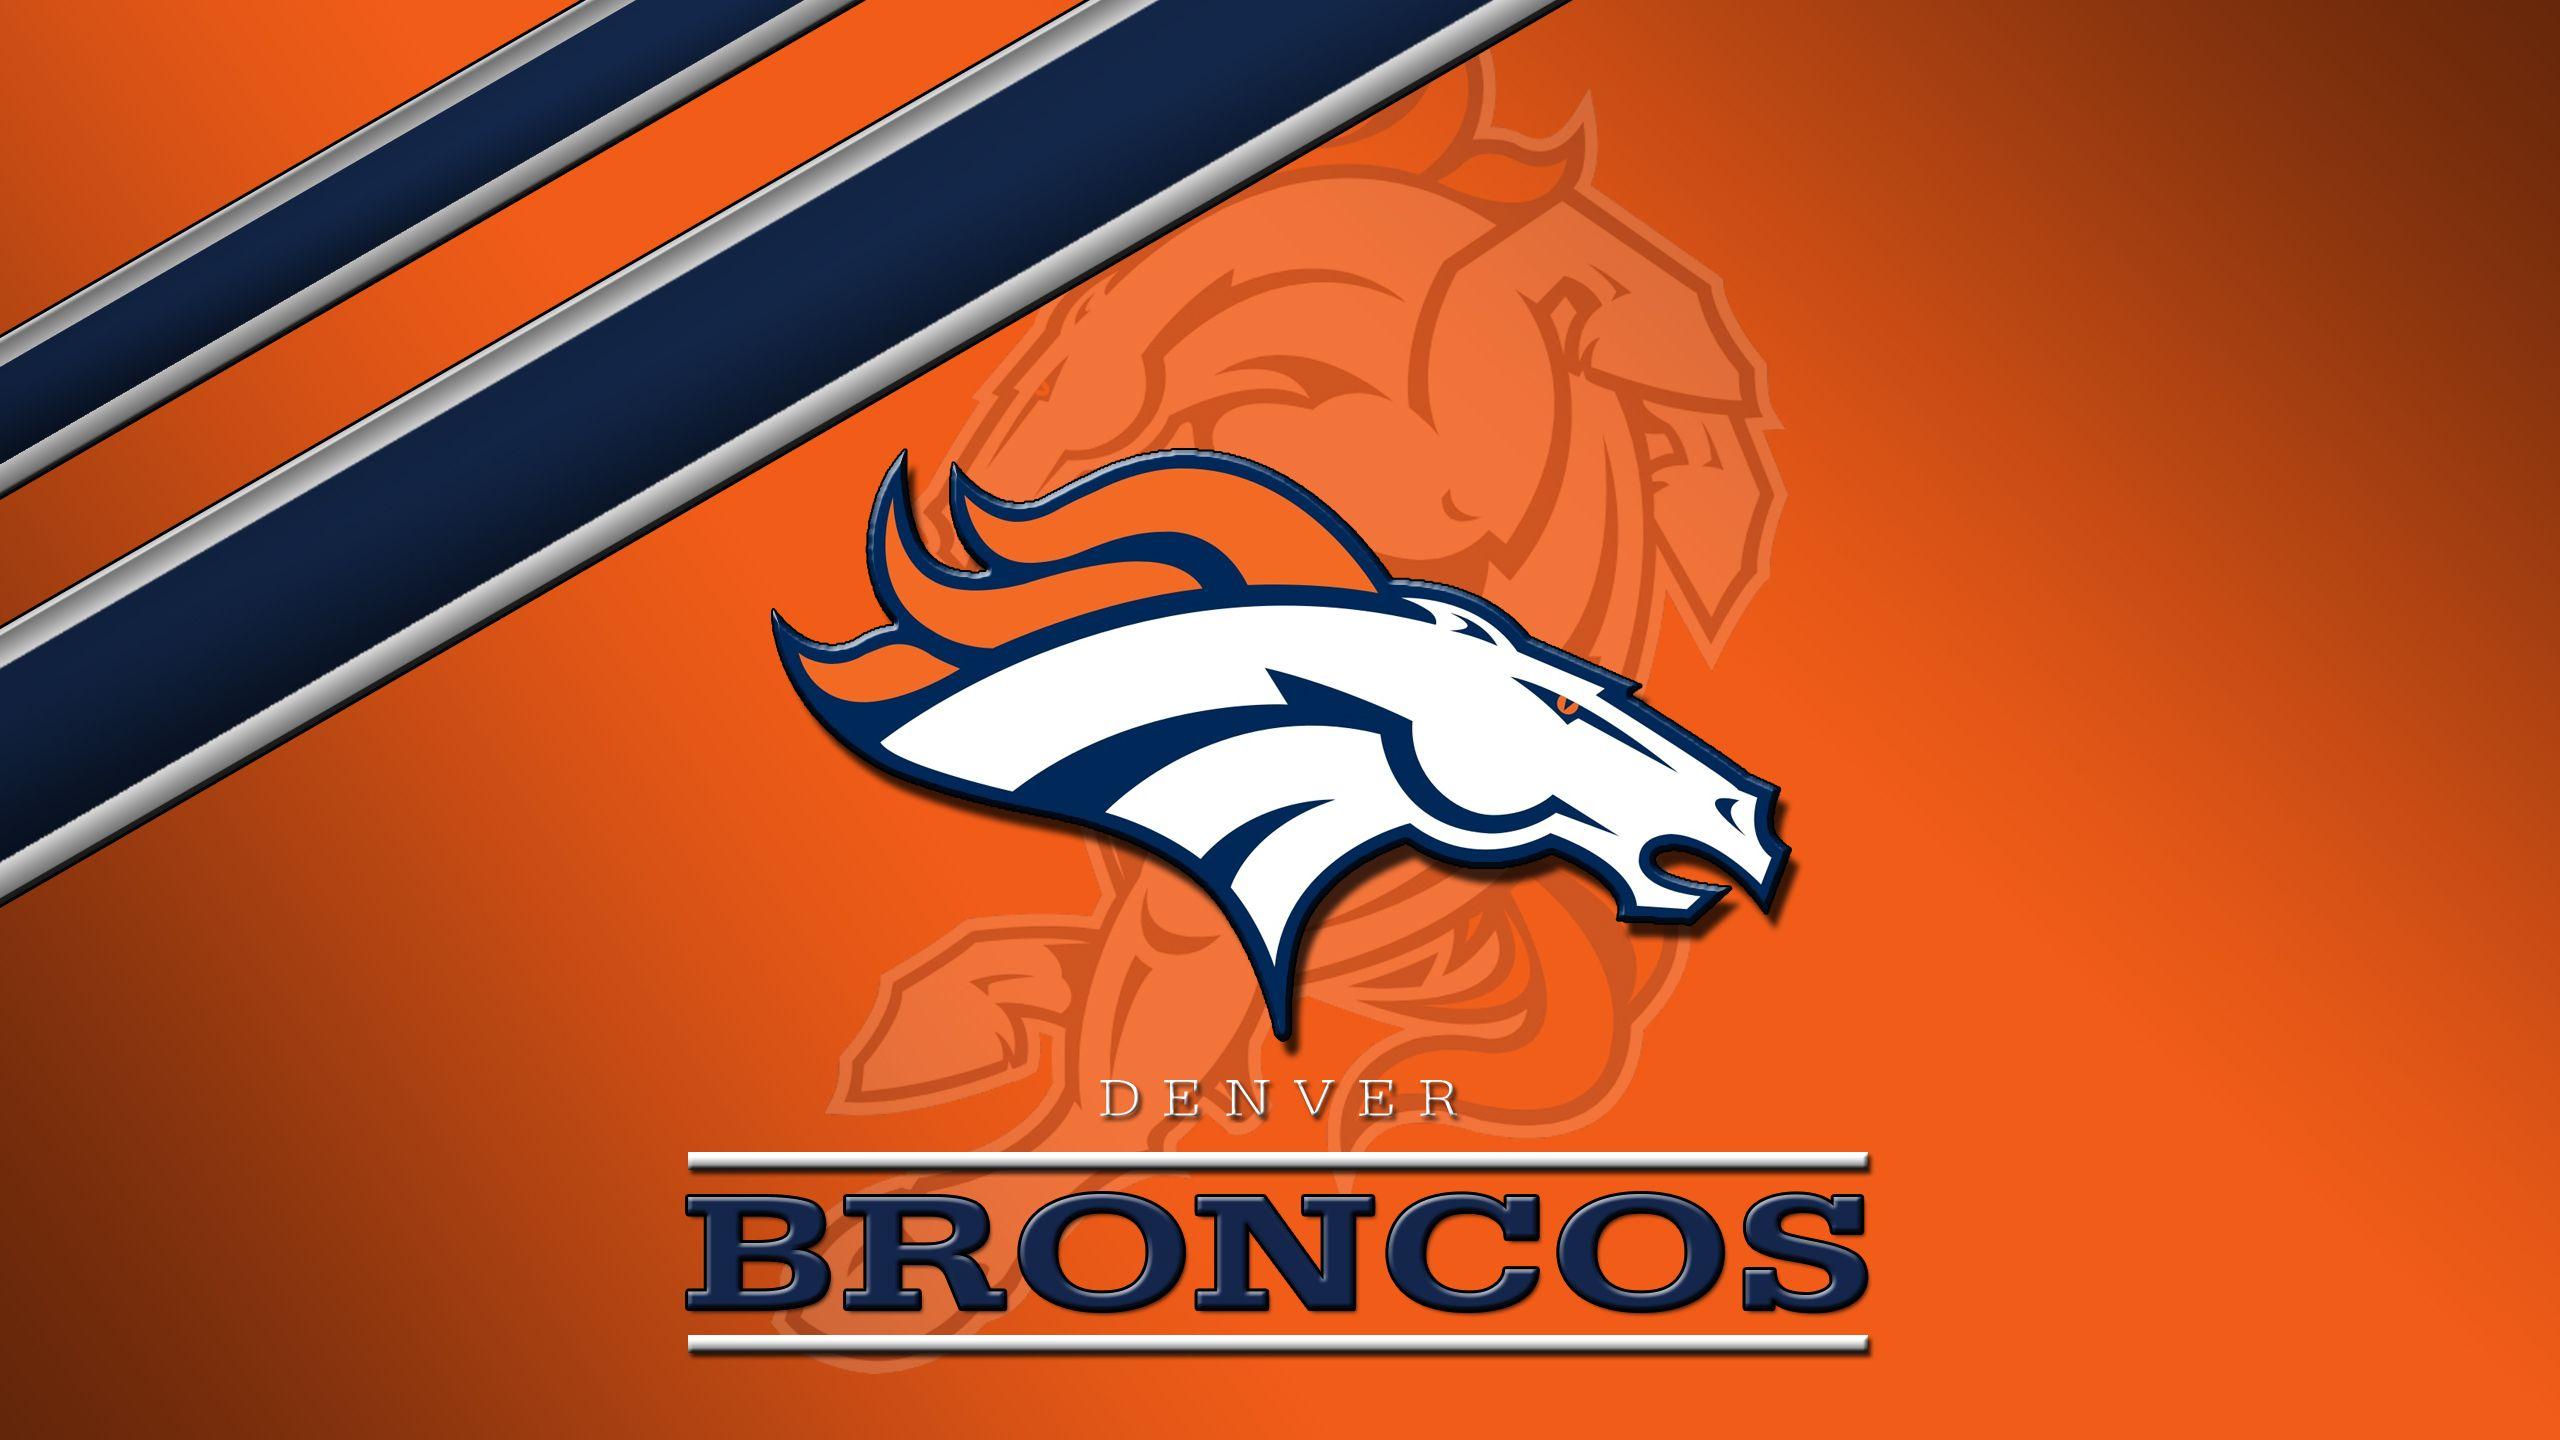 Denver Broncos Wallpaper Image Photo Picture Background